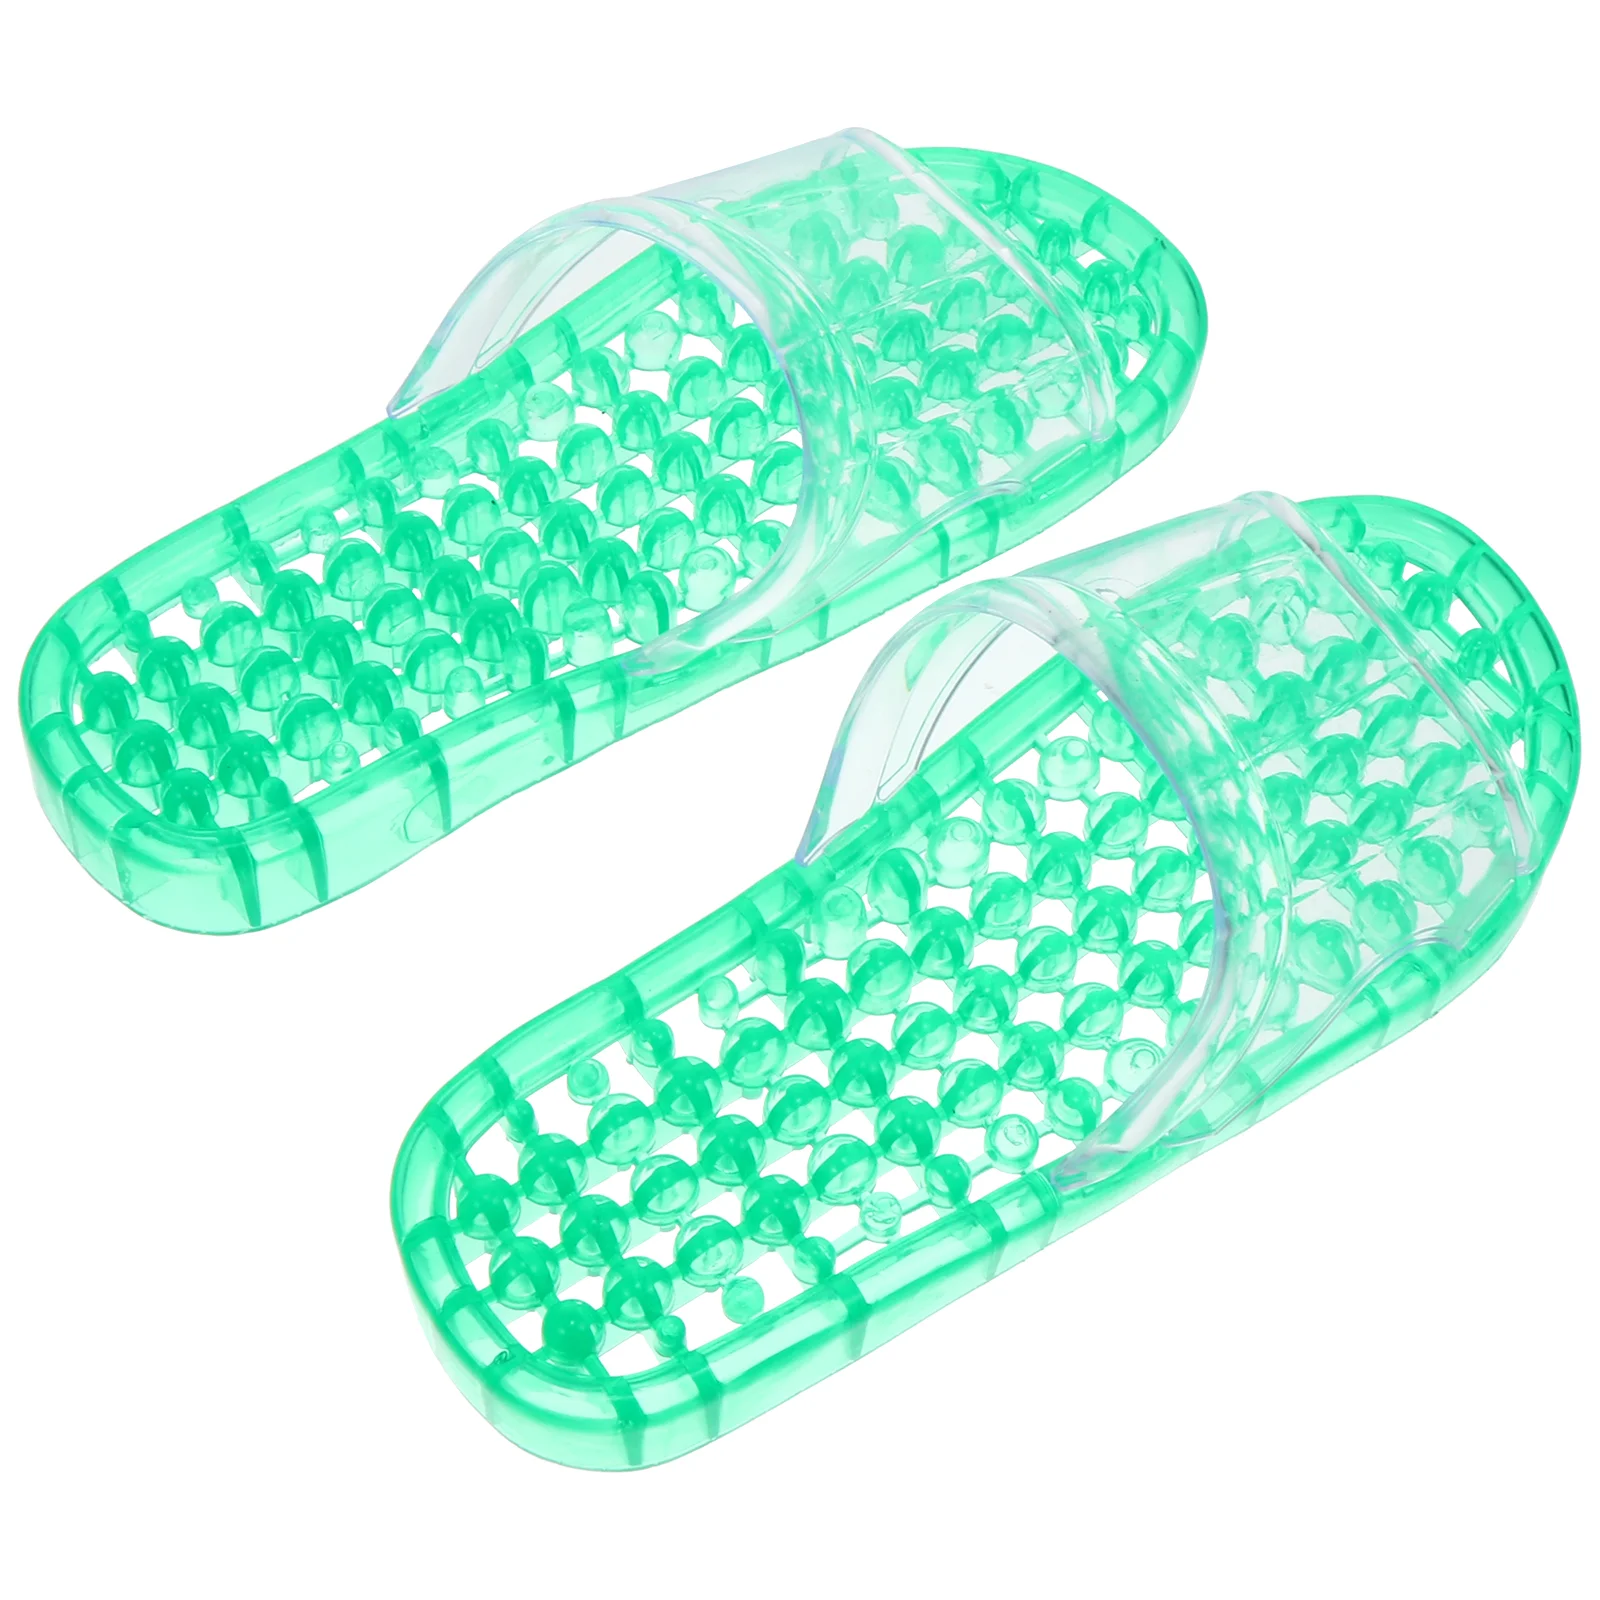 

Take Bath Slippers Fitness Foot Spa Soak Tub Crystal 6 Pvc Quick Drying Shower